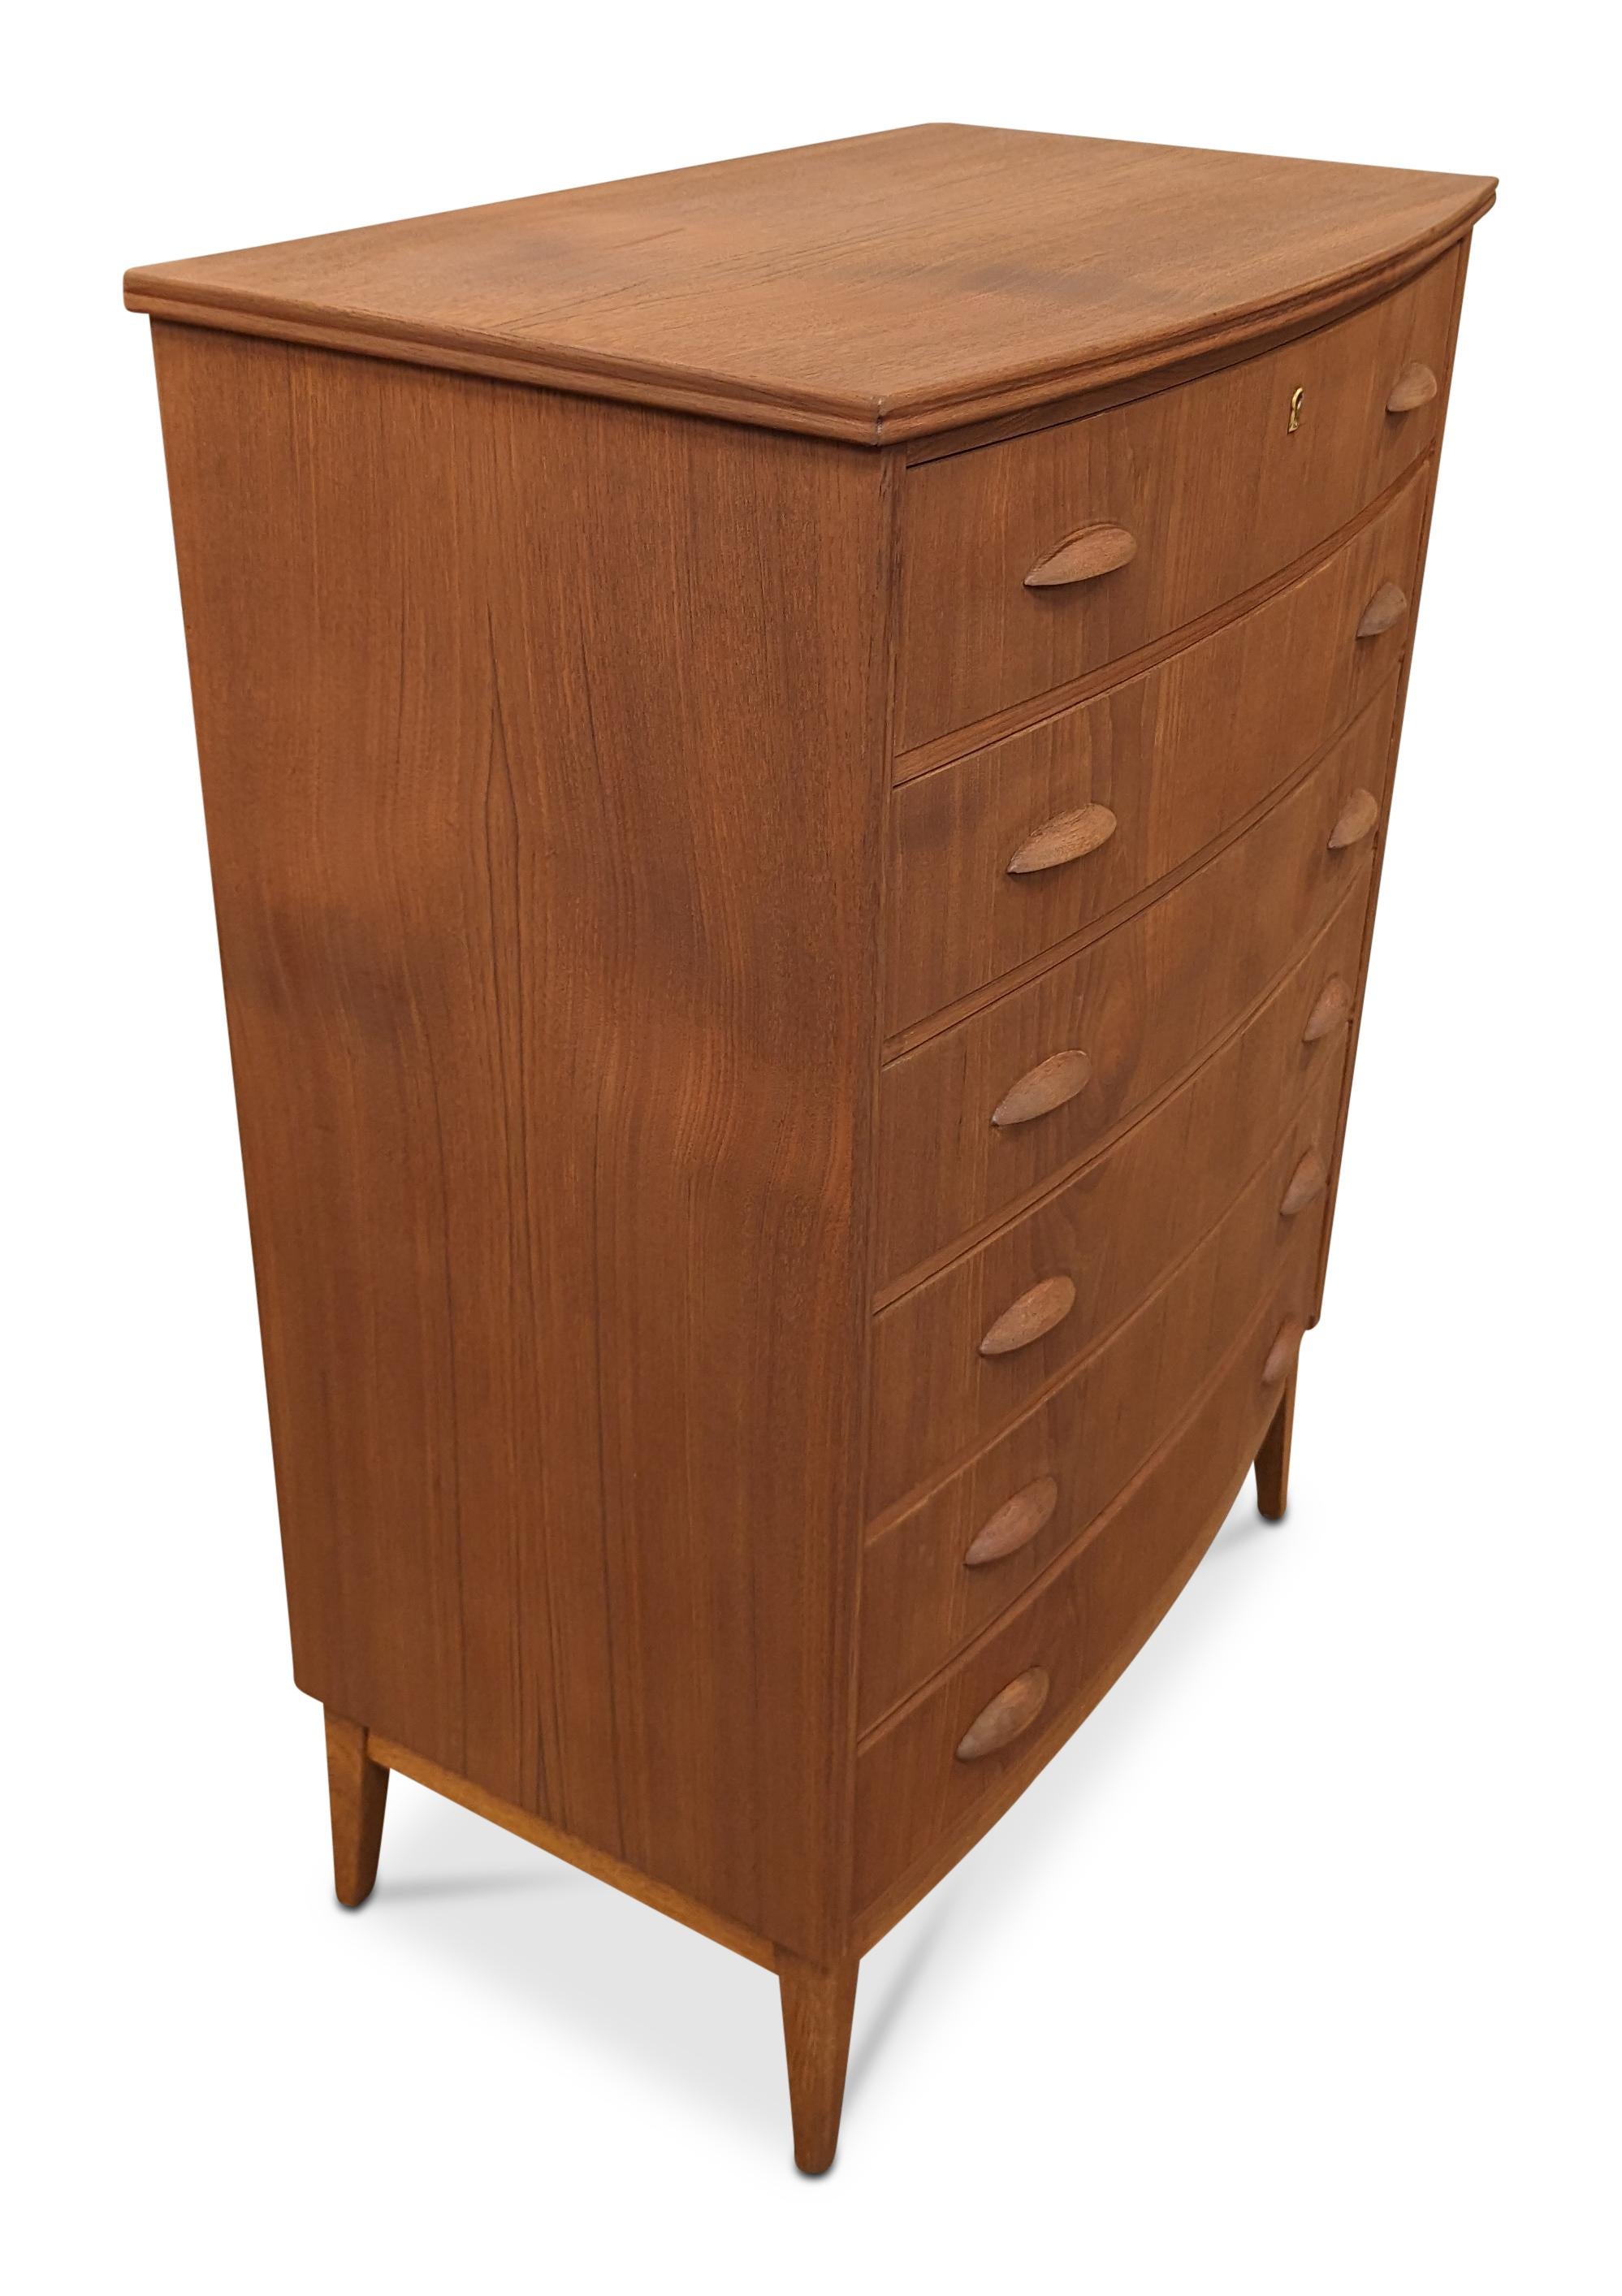 Vintage Danish Mid Century Tall Boy Teak Dresser- 022443 In Good Condition For Sale In Jersey City, NJ